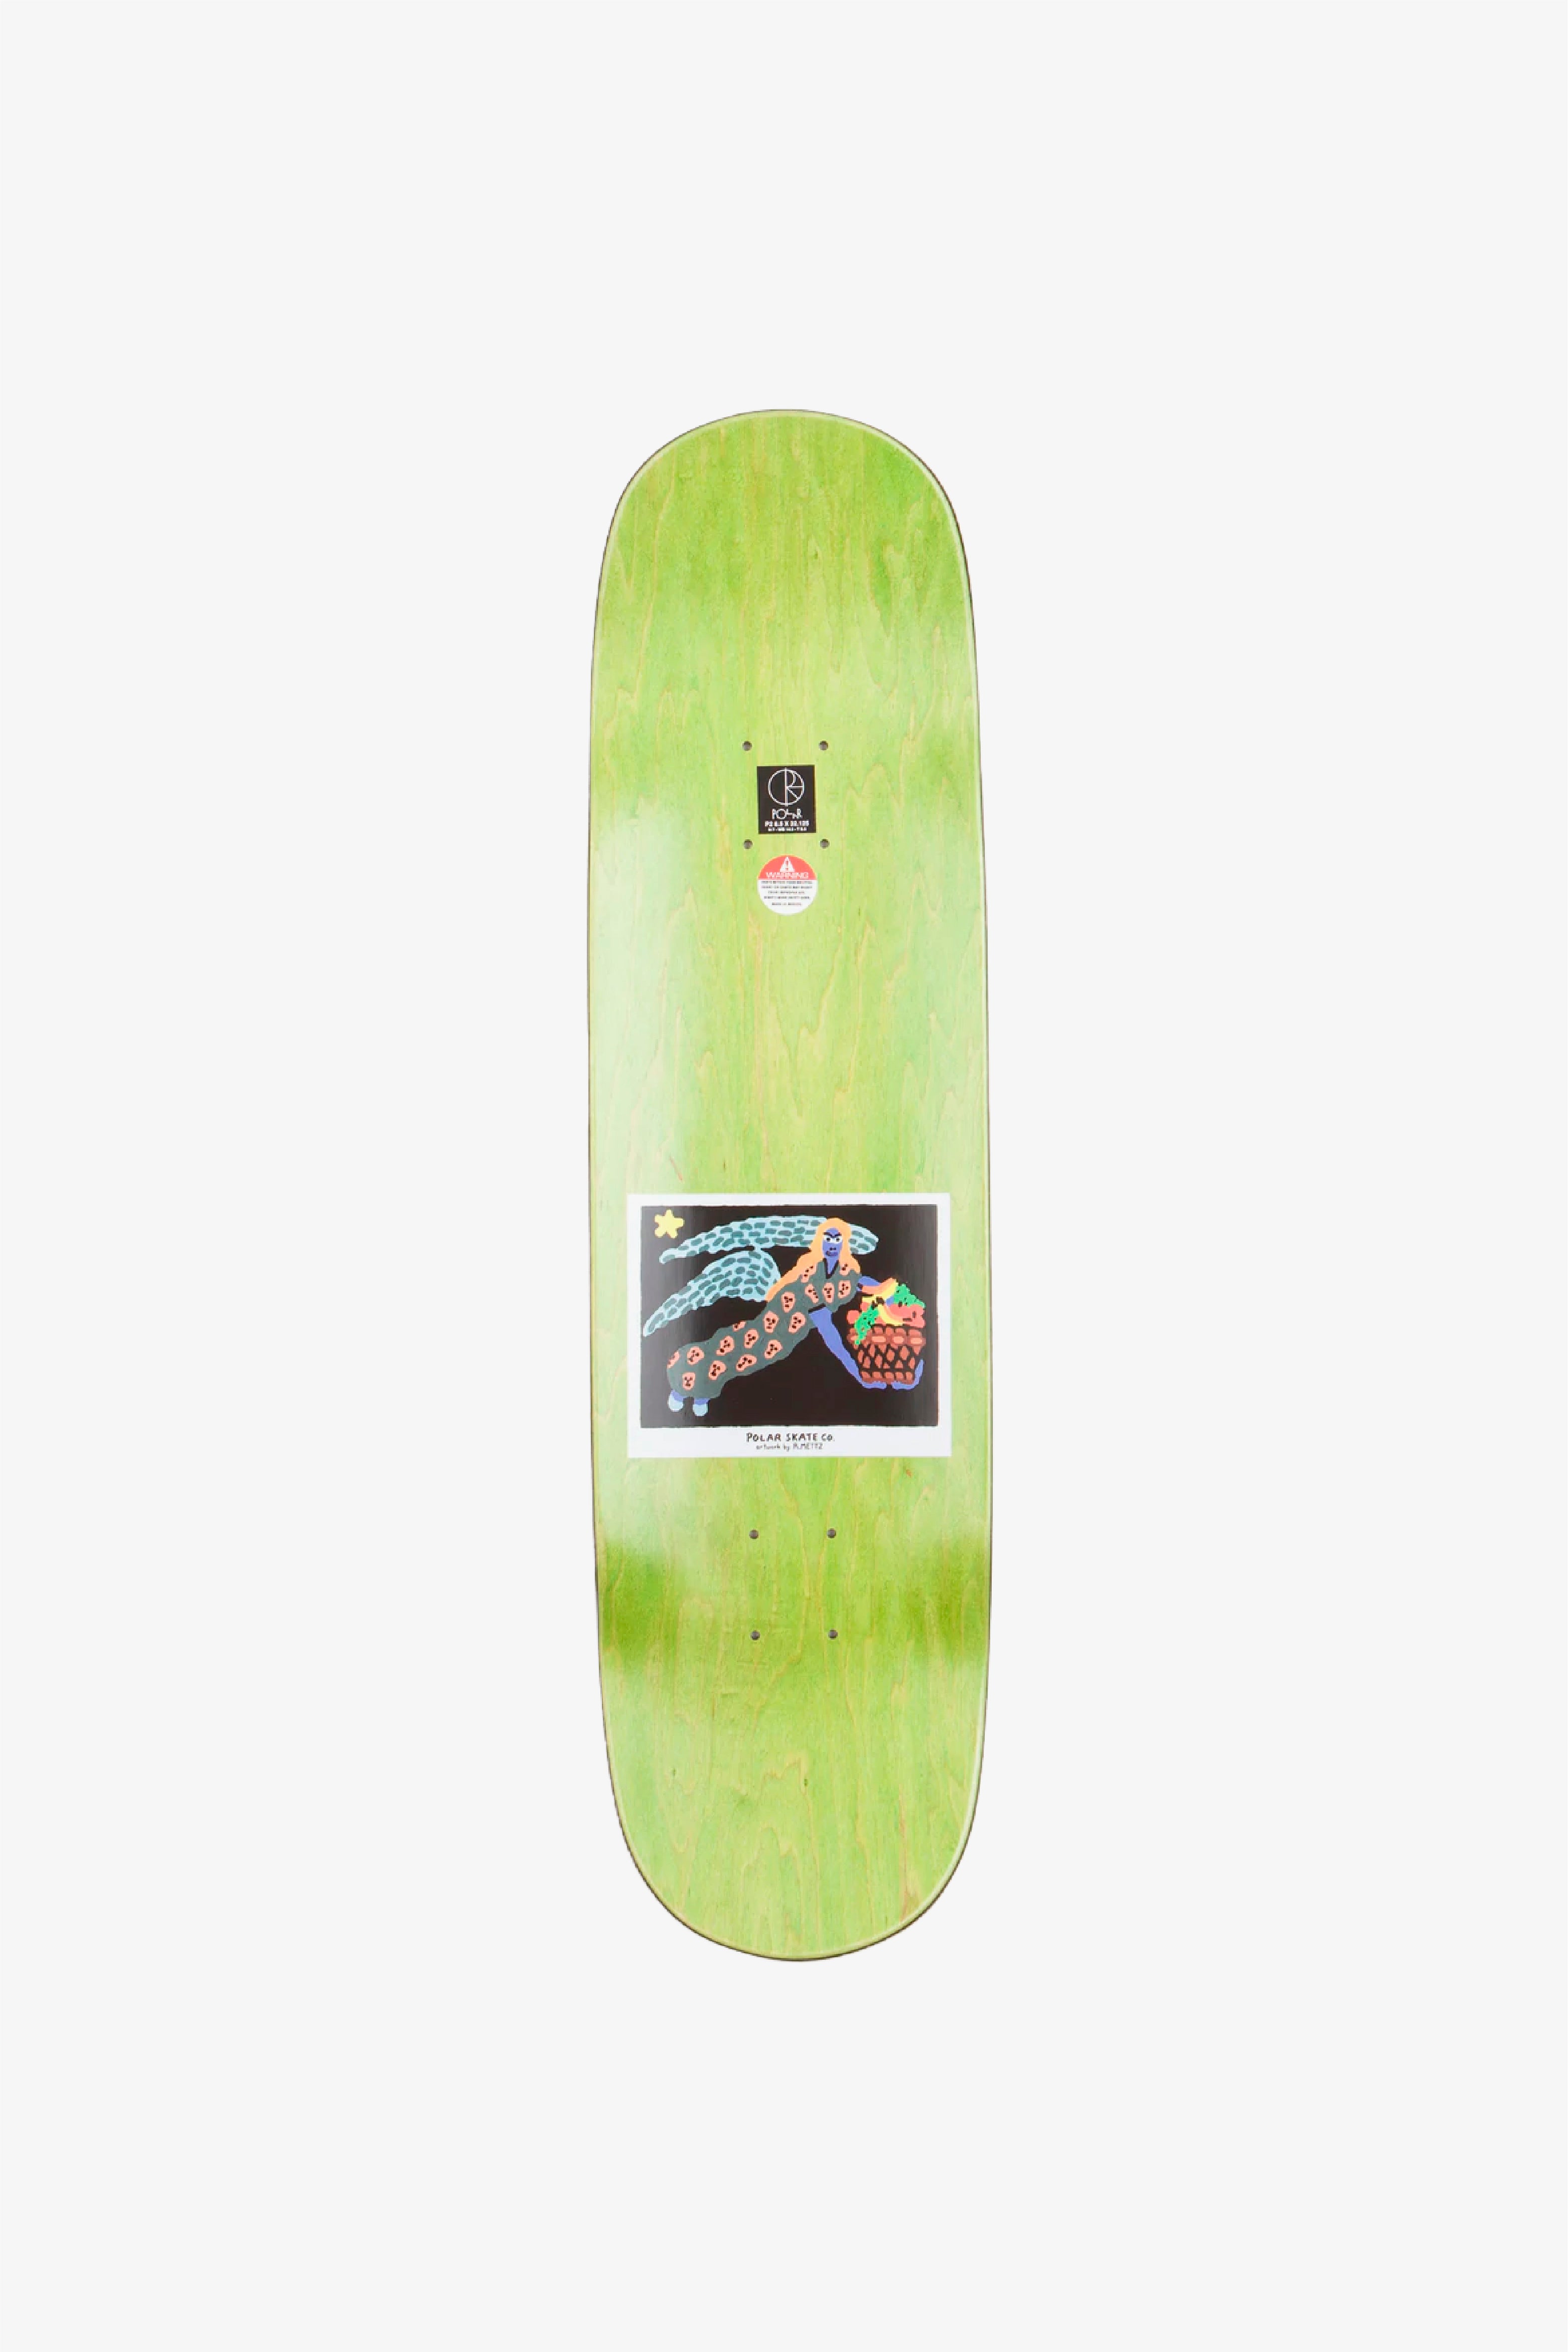 Selectshop FRAME - POLAR SKATE CO. Nick Boserio Fruit Lady "P2 Shape" Deck Skate Dubai